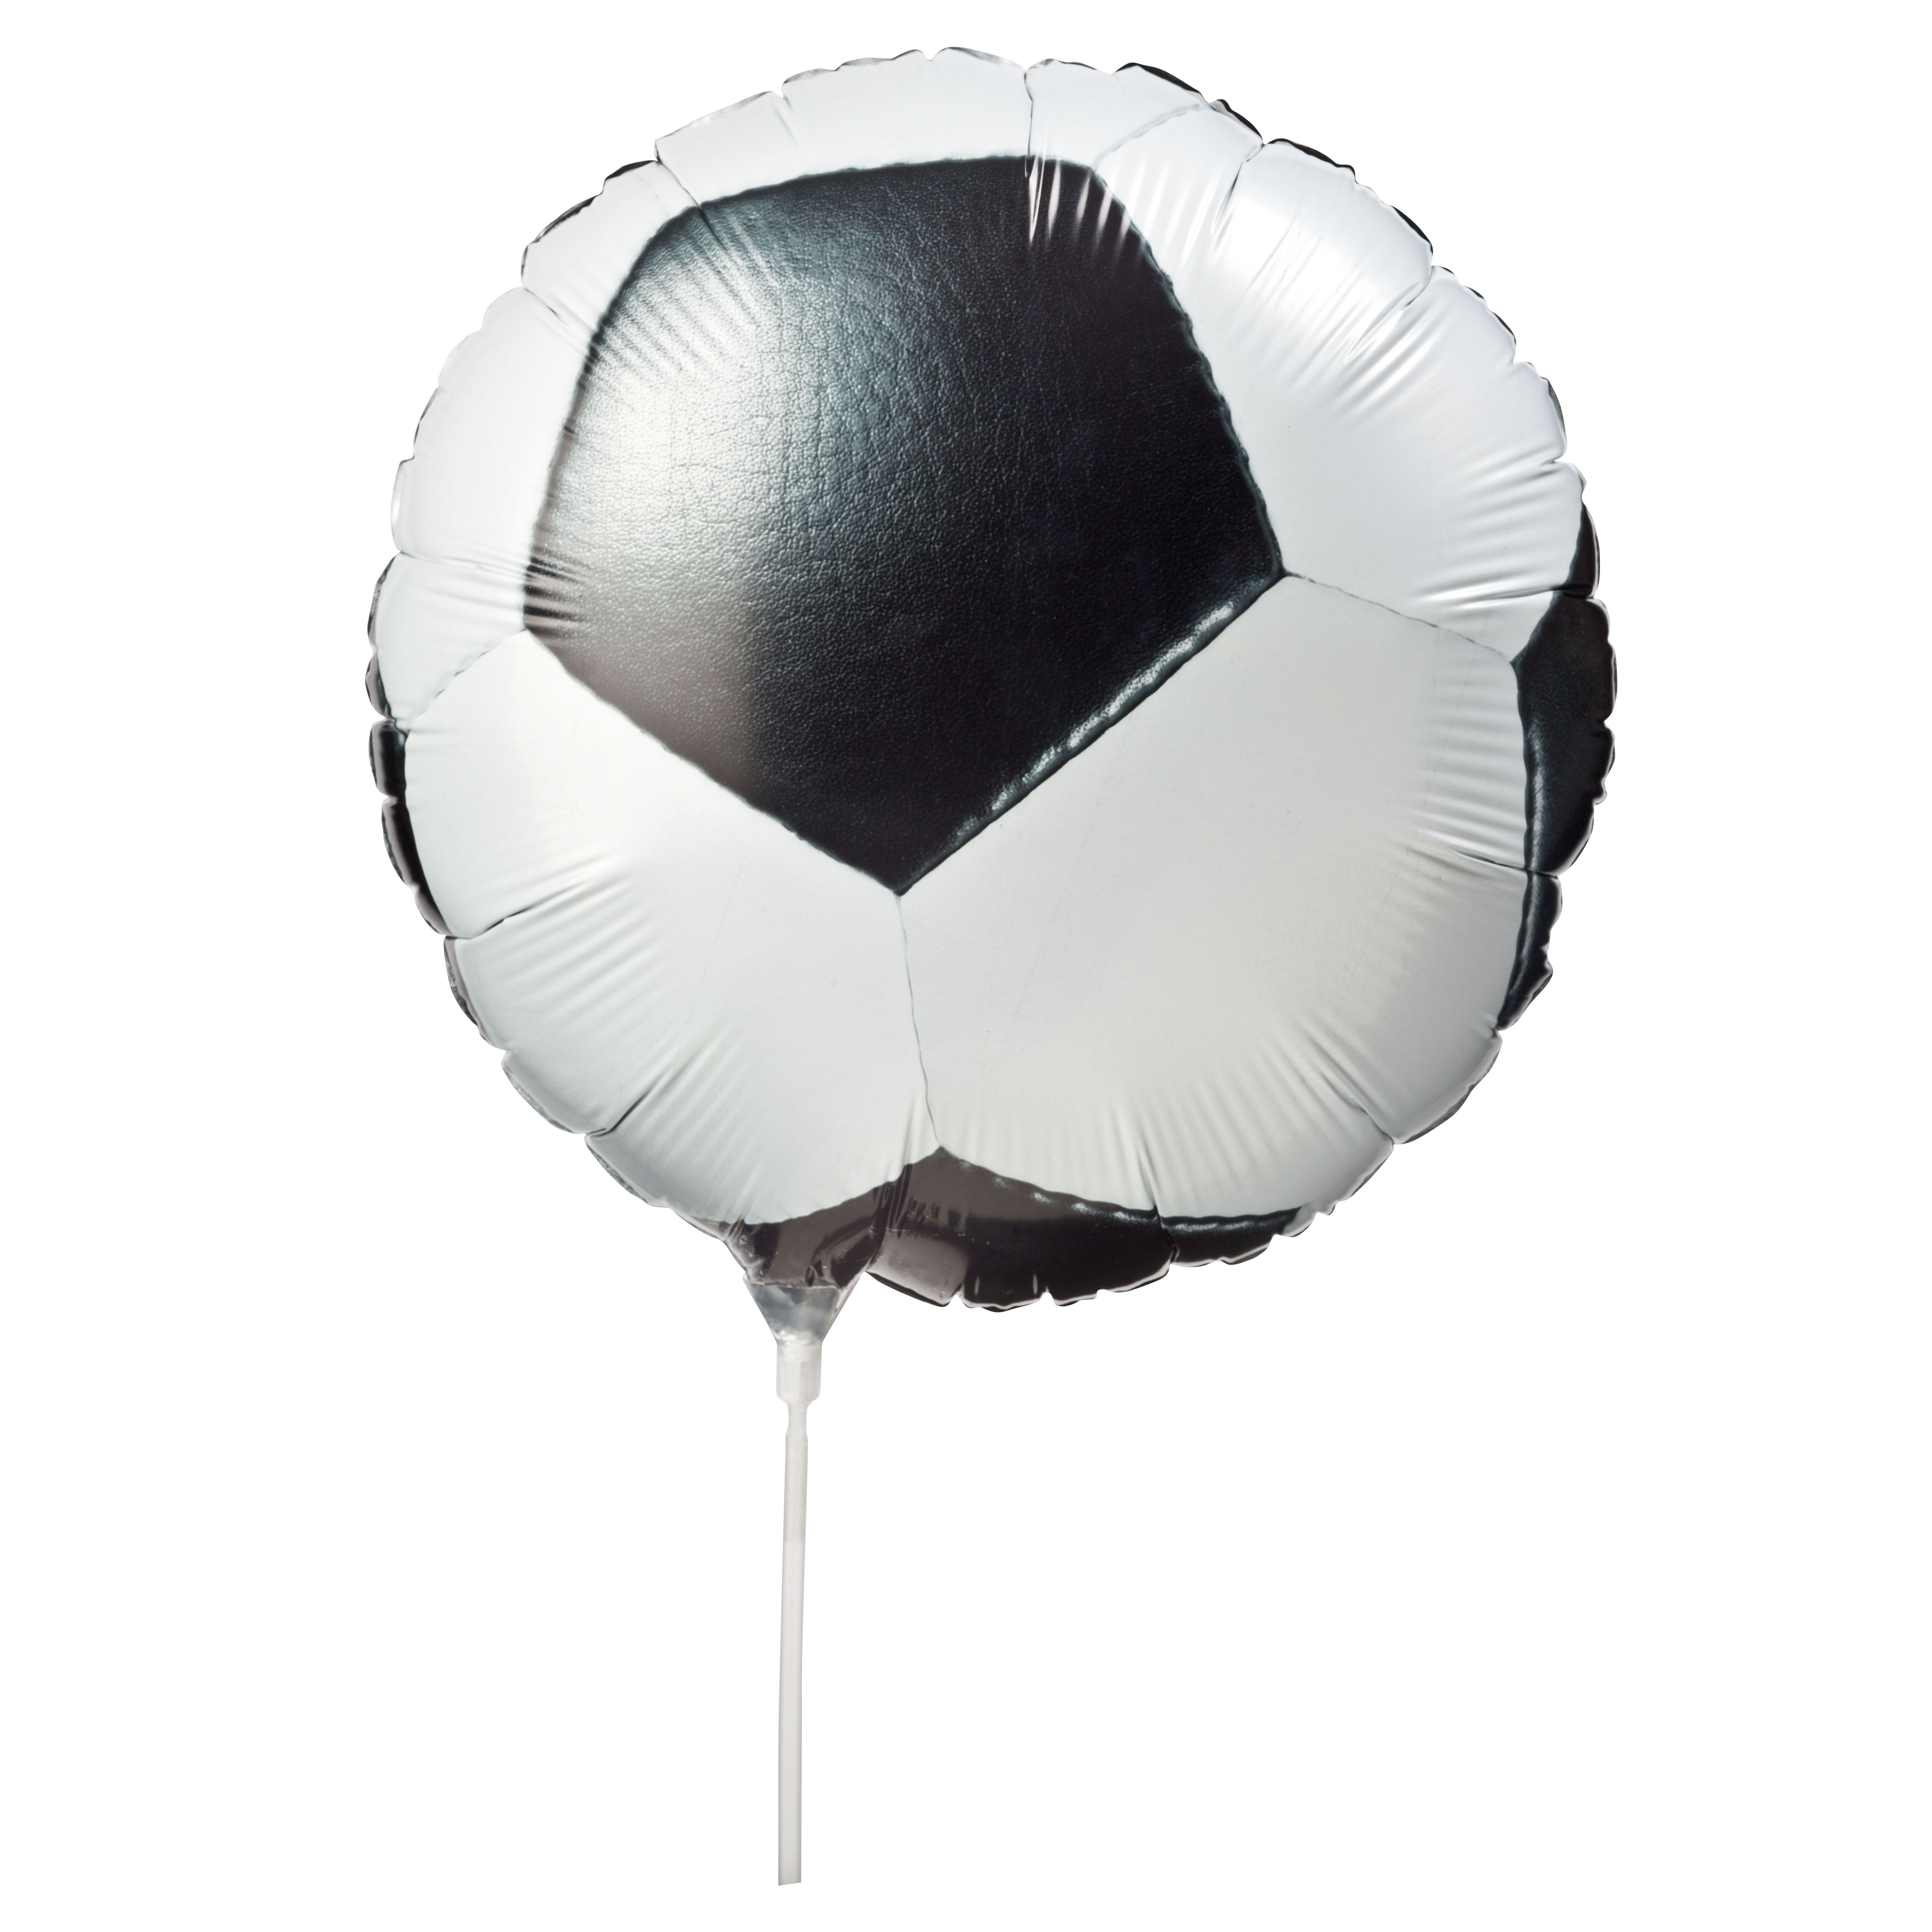 Luftballon Soccer Deutschland